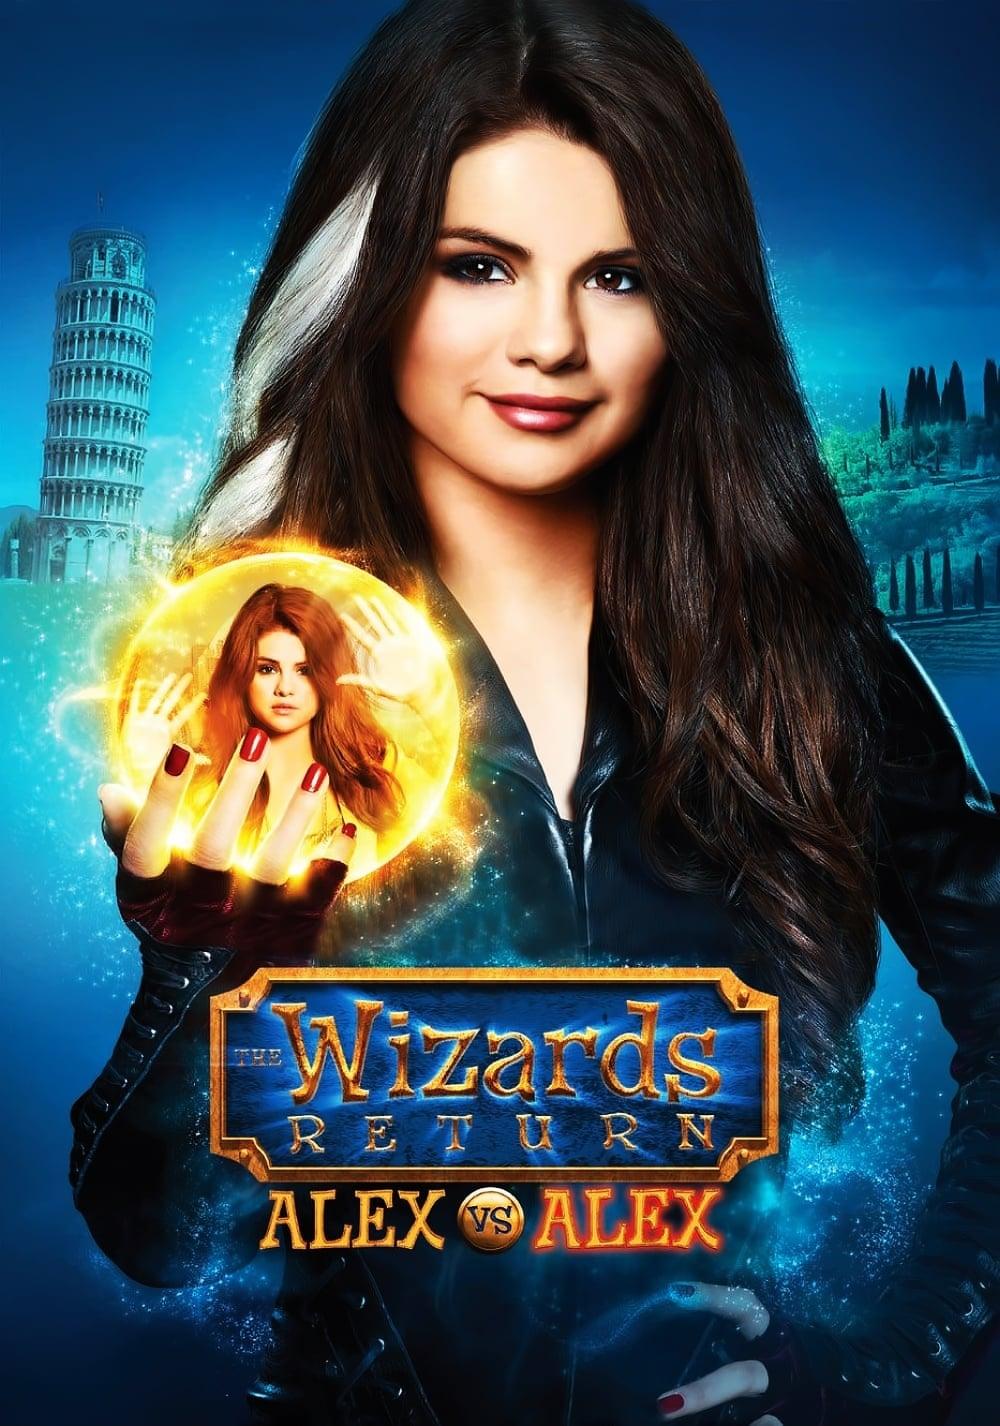 The Wizards Return: Alex vs. Alex poster